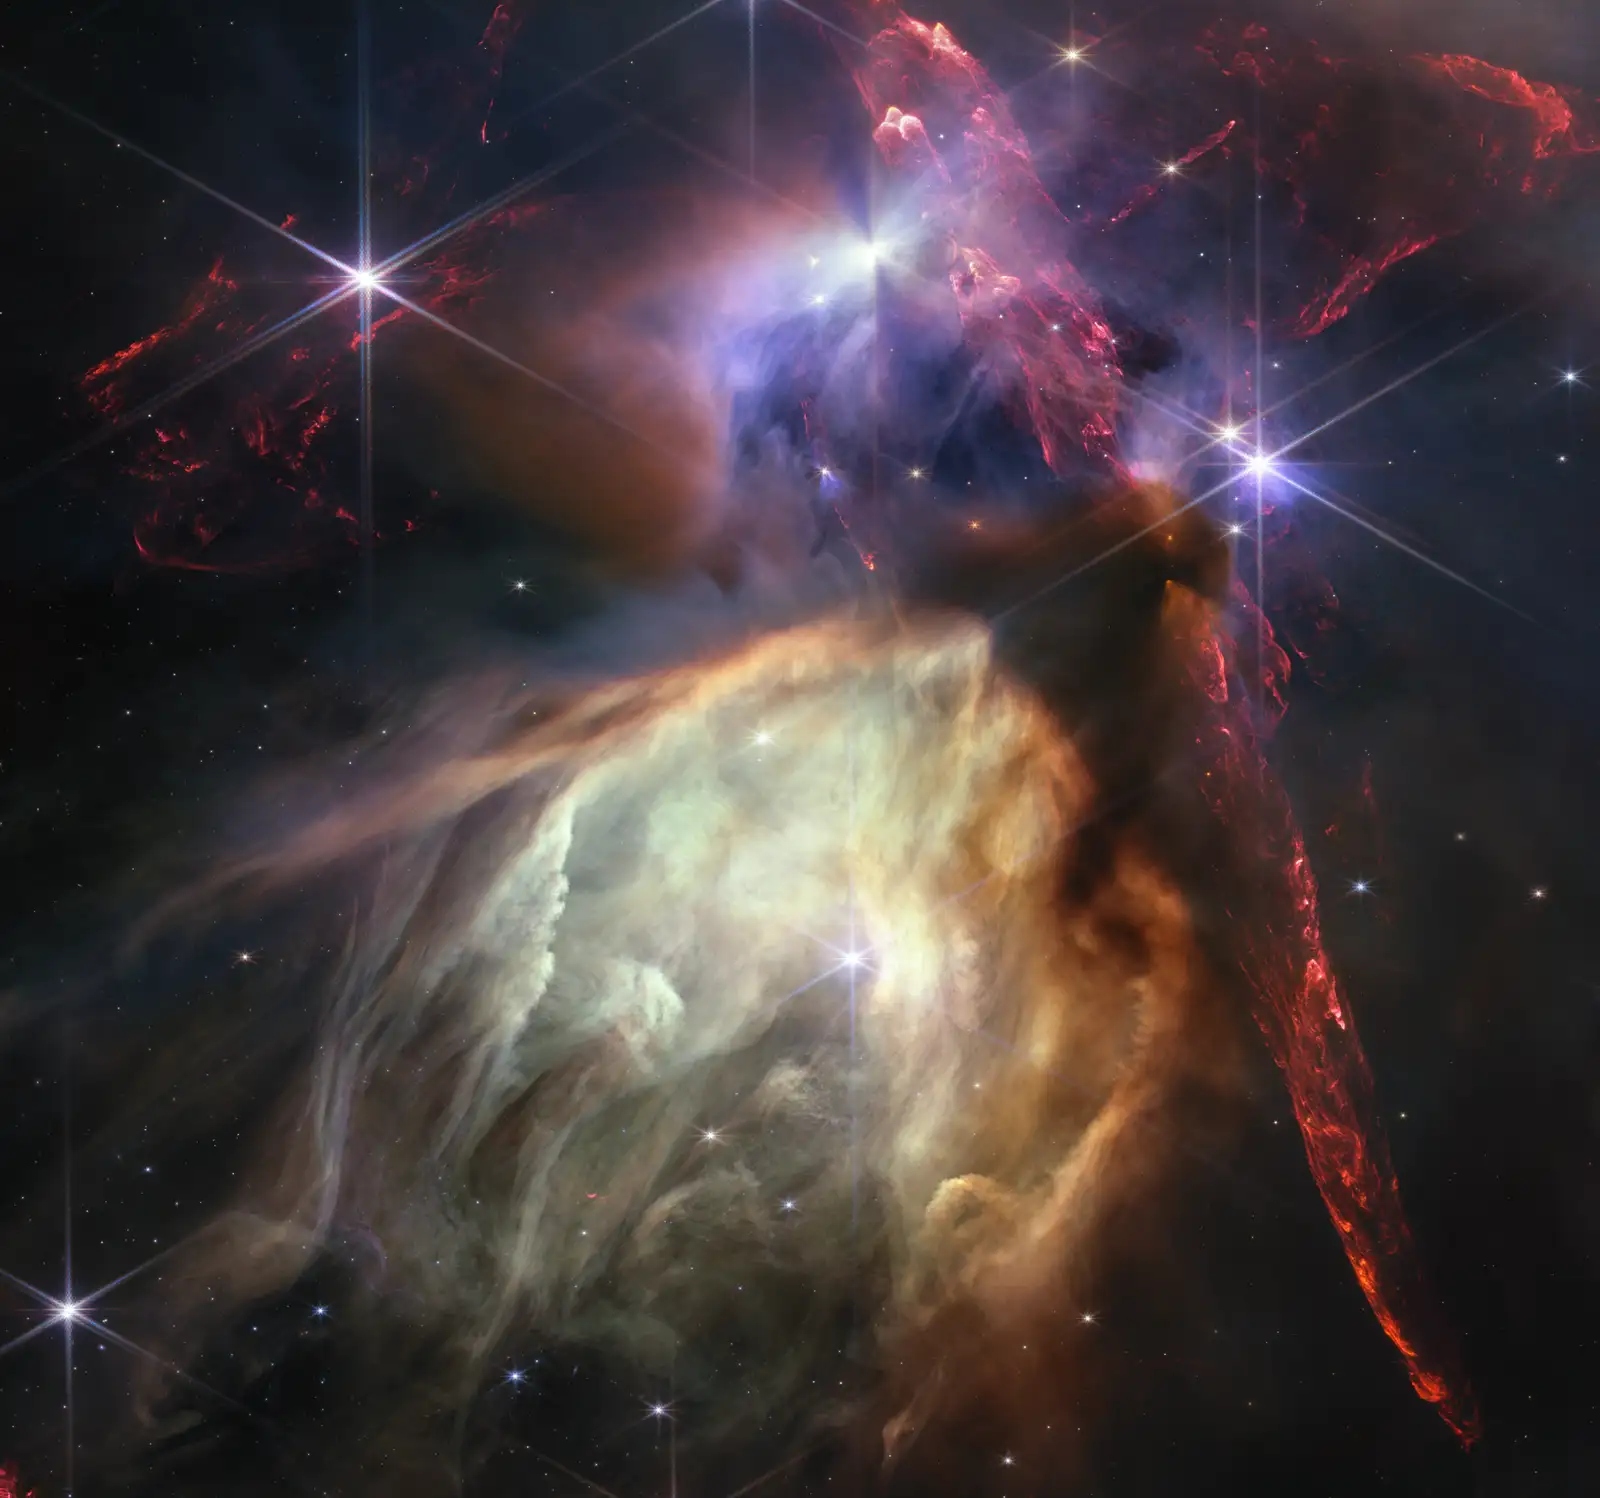 Rho Ophiuchi image by NASA